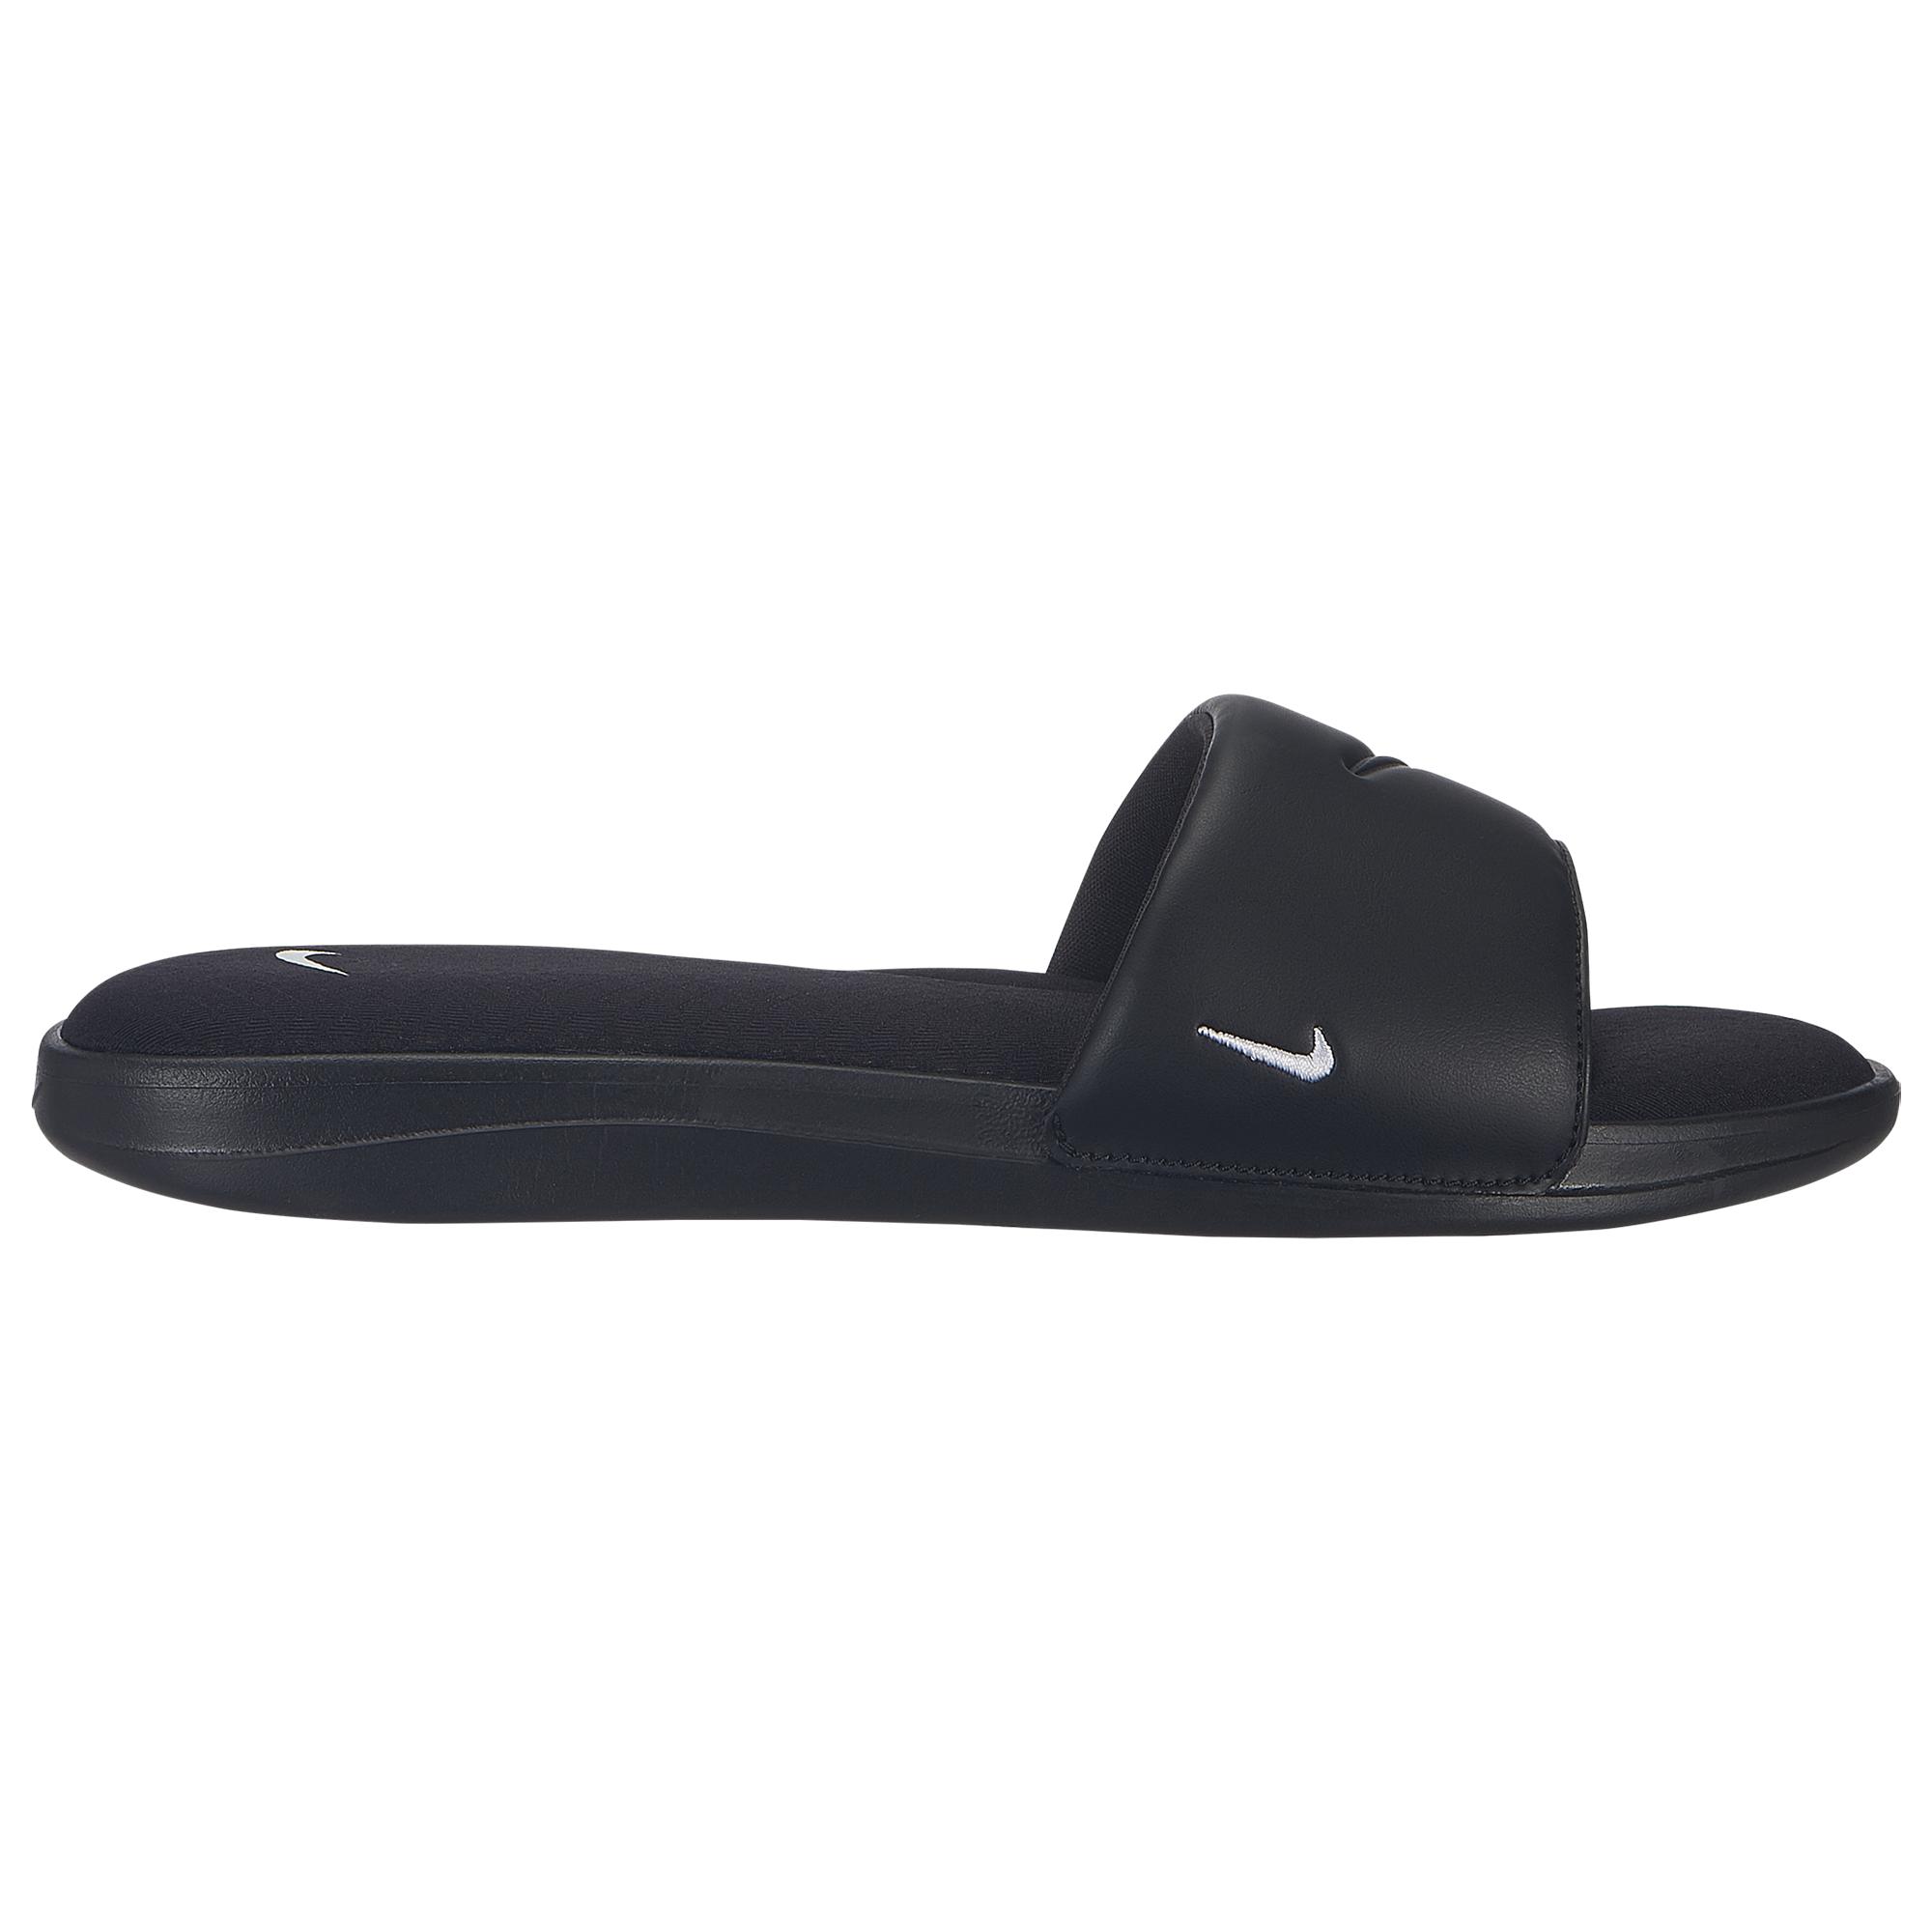 Nike Ultra Comfort 3 Slide in Black - Lyst